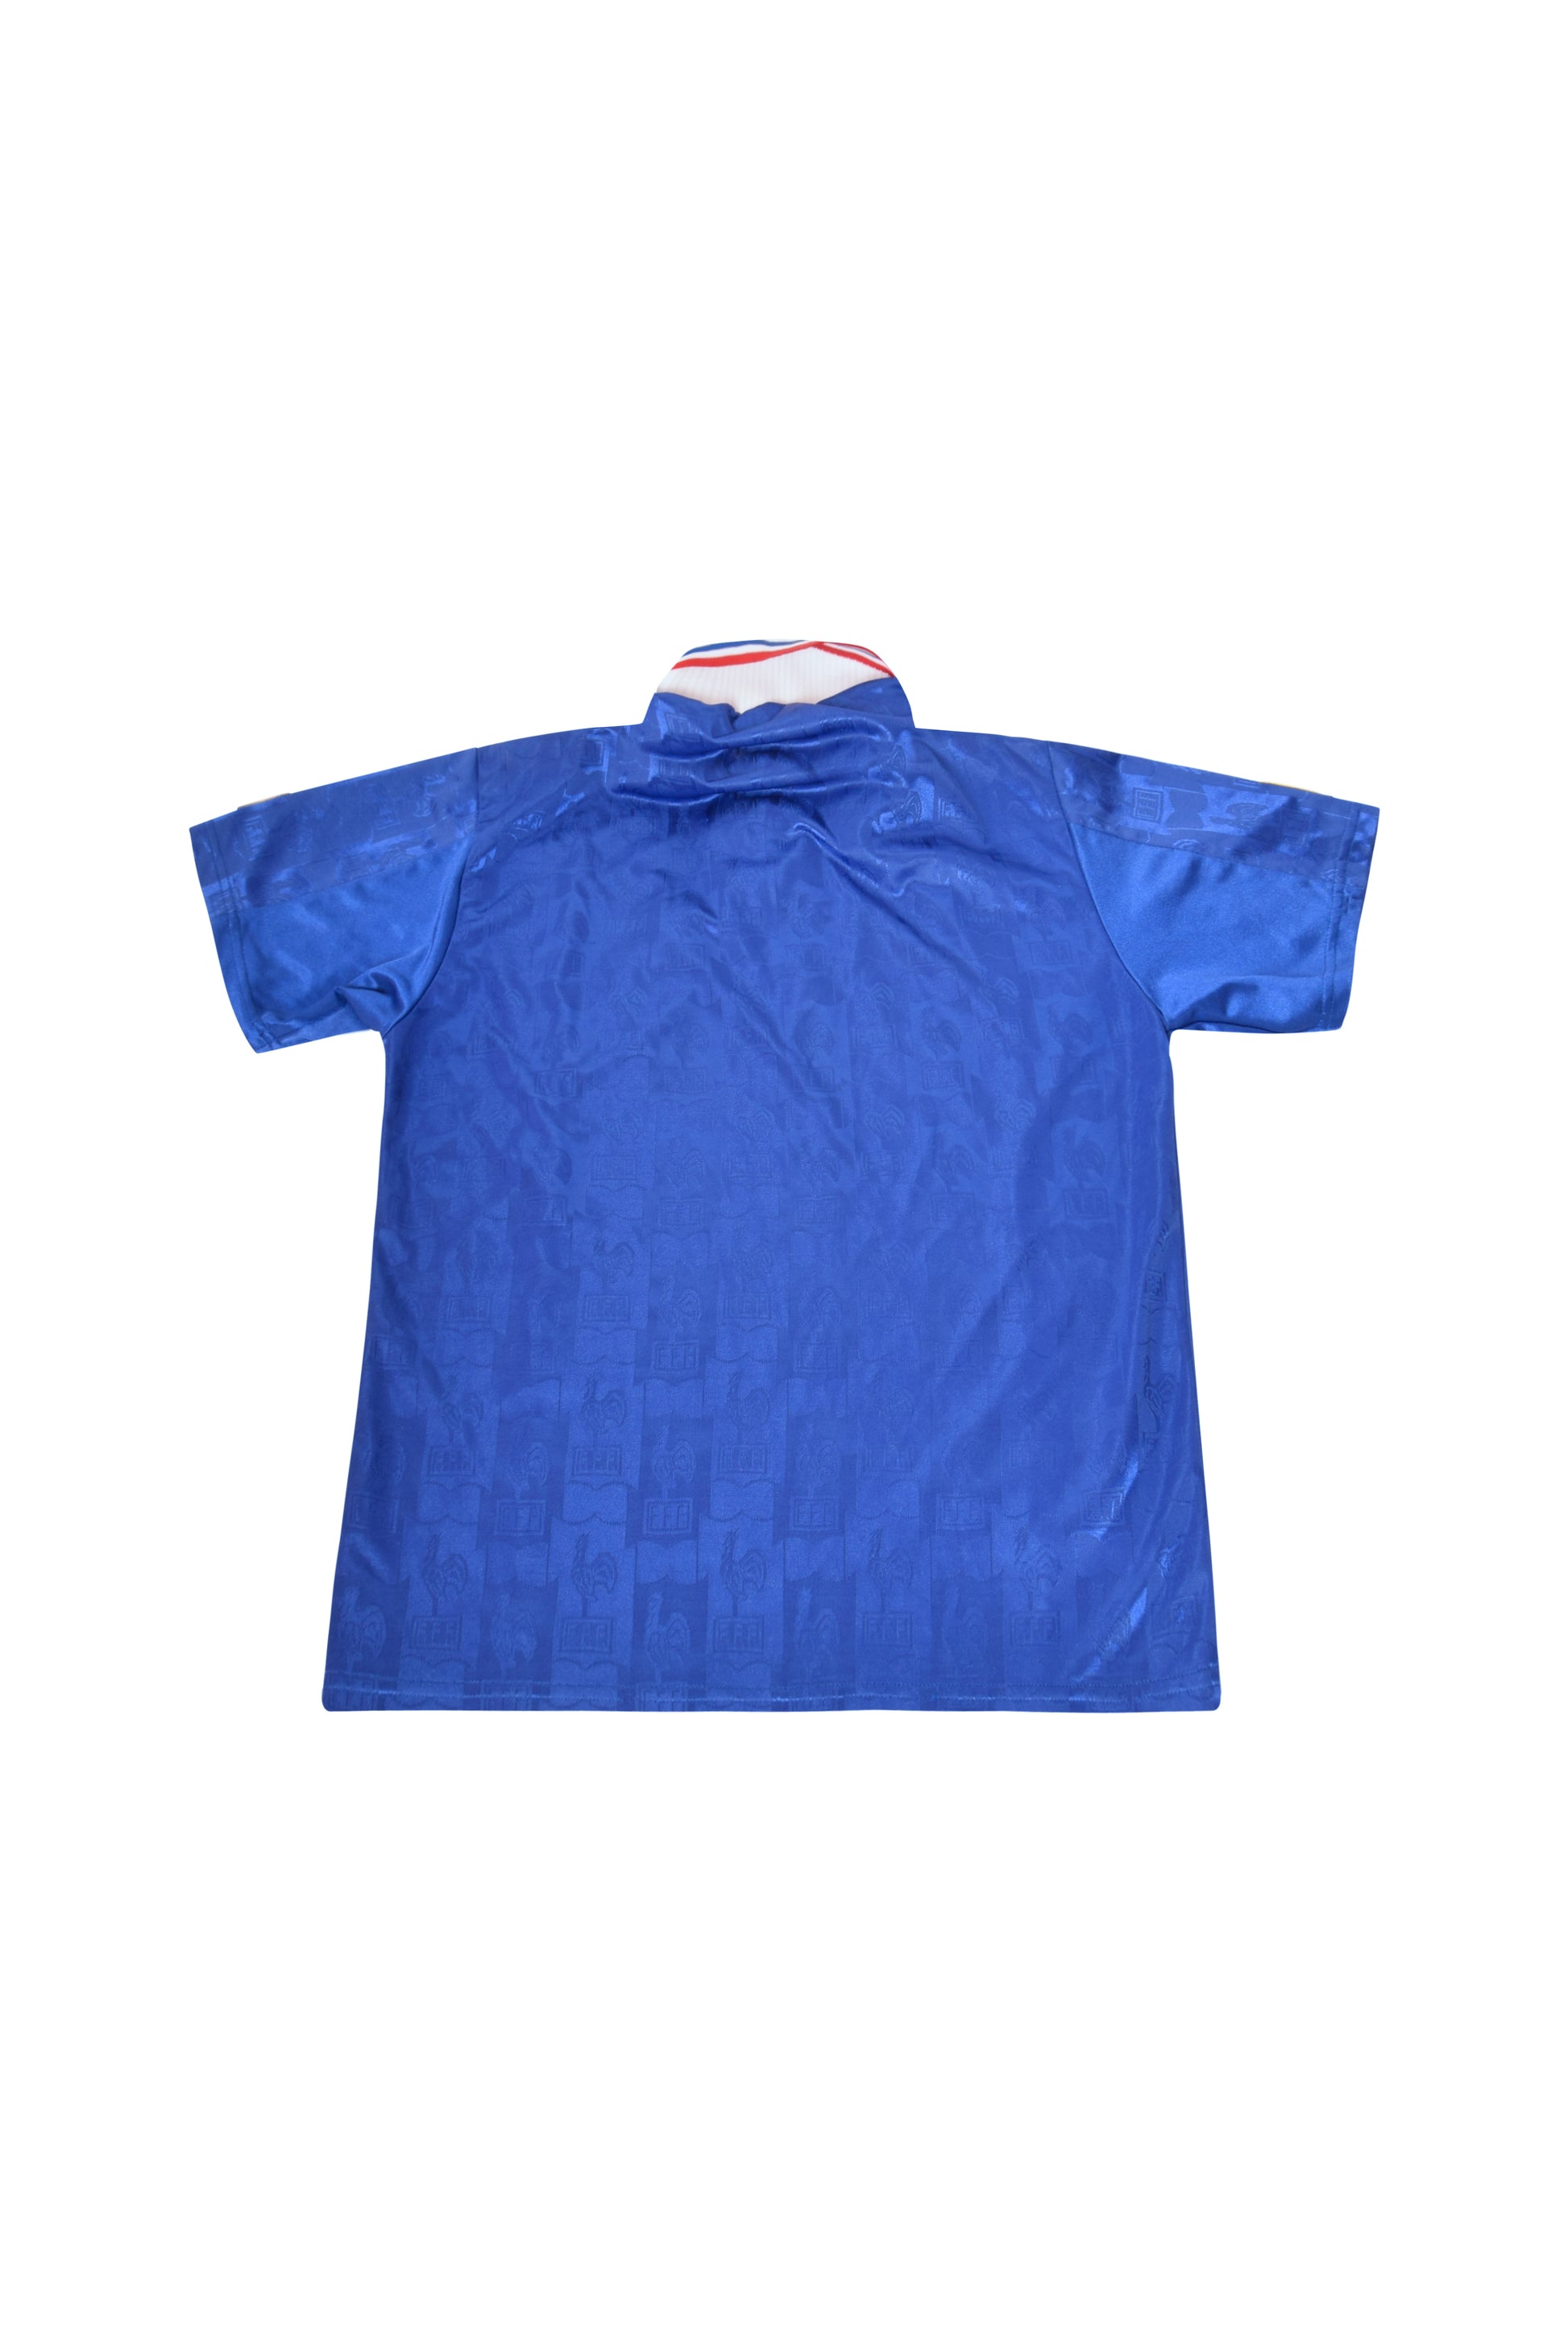 Vintage France Adidas Football Shirt Home '96-'97 Blue Size M